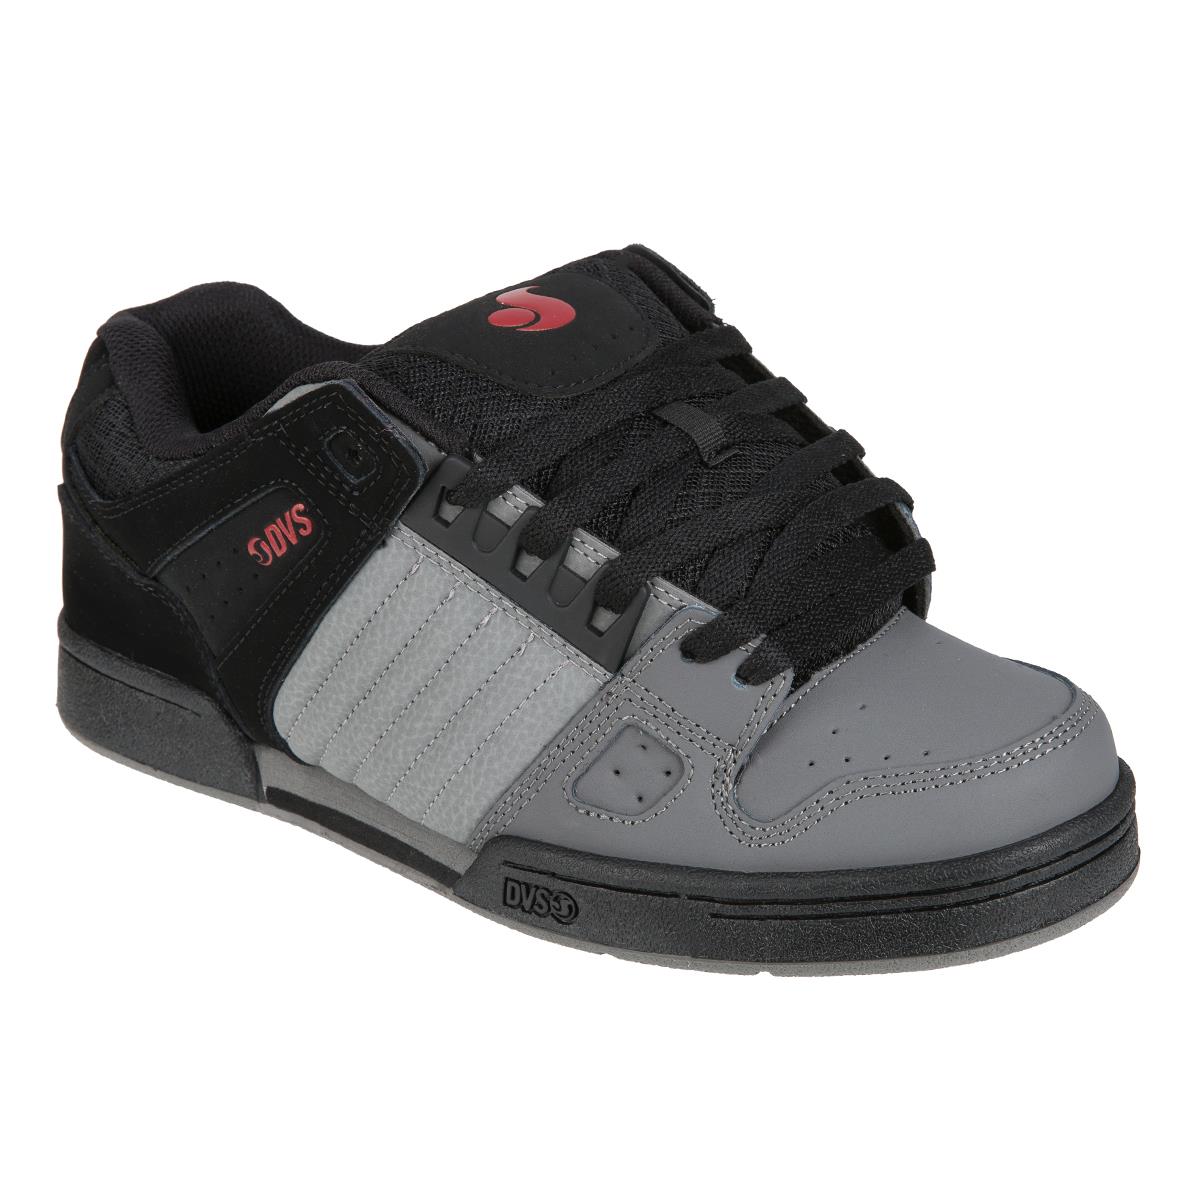 DVS Shoes Celsius Charcoal/Gray/Black Nubuk